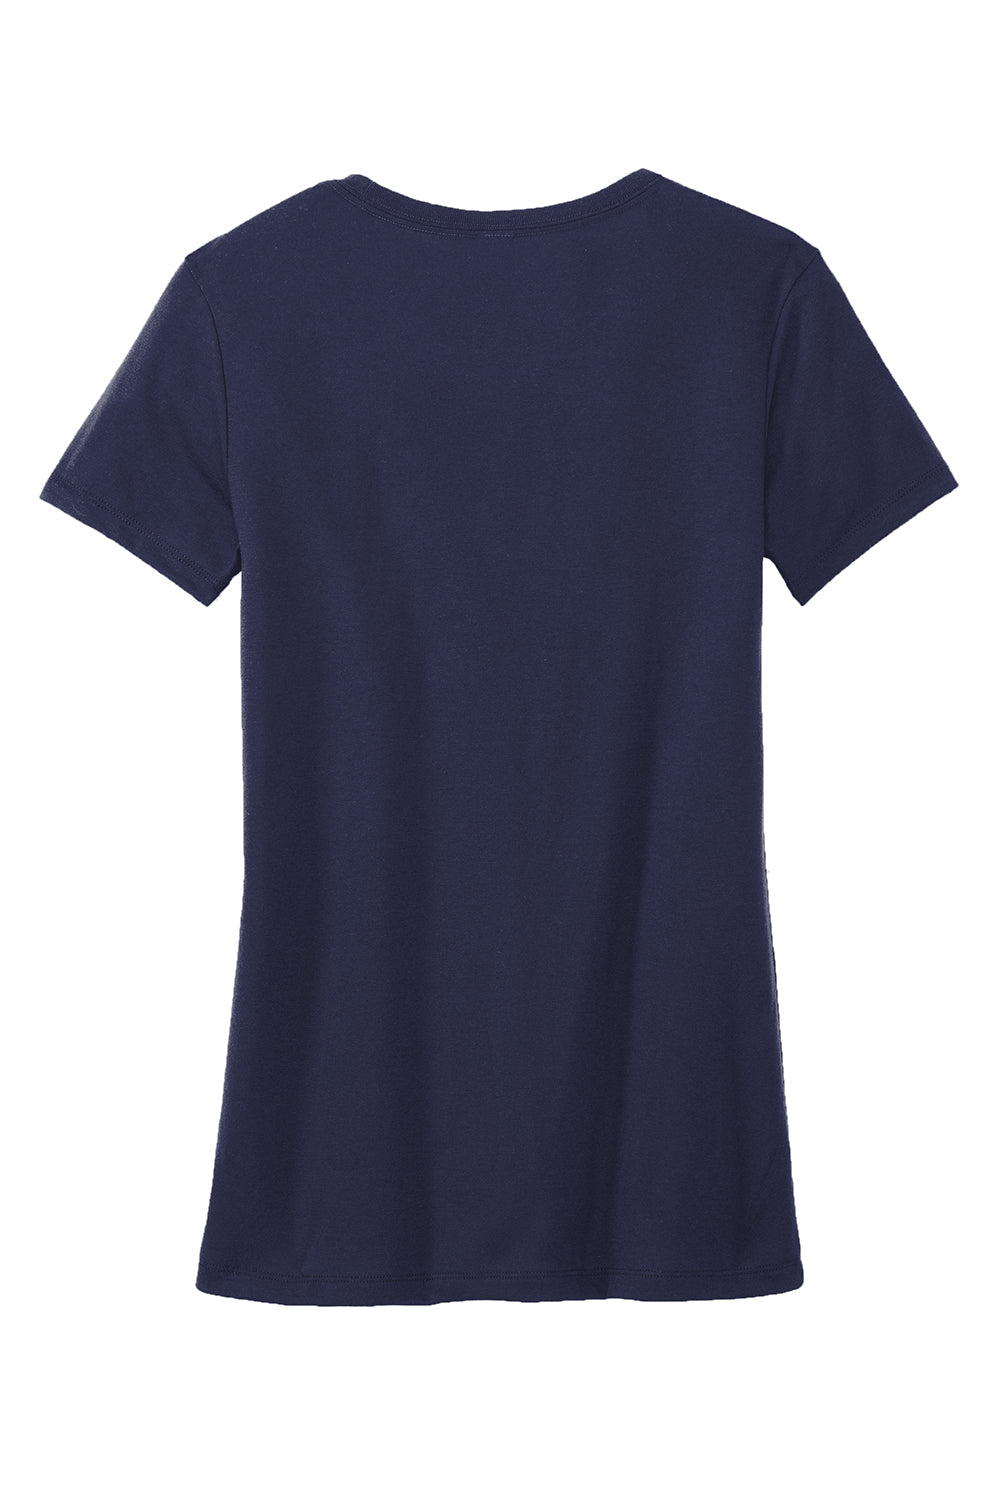 Allmade AL2008 Mens Short Sleeve Crewneck T-Shirt Night Sky Navy Blue Flat Back